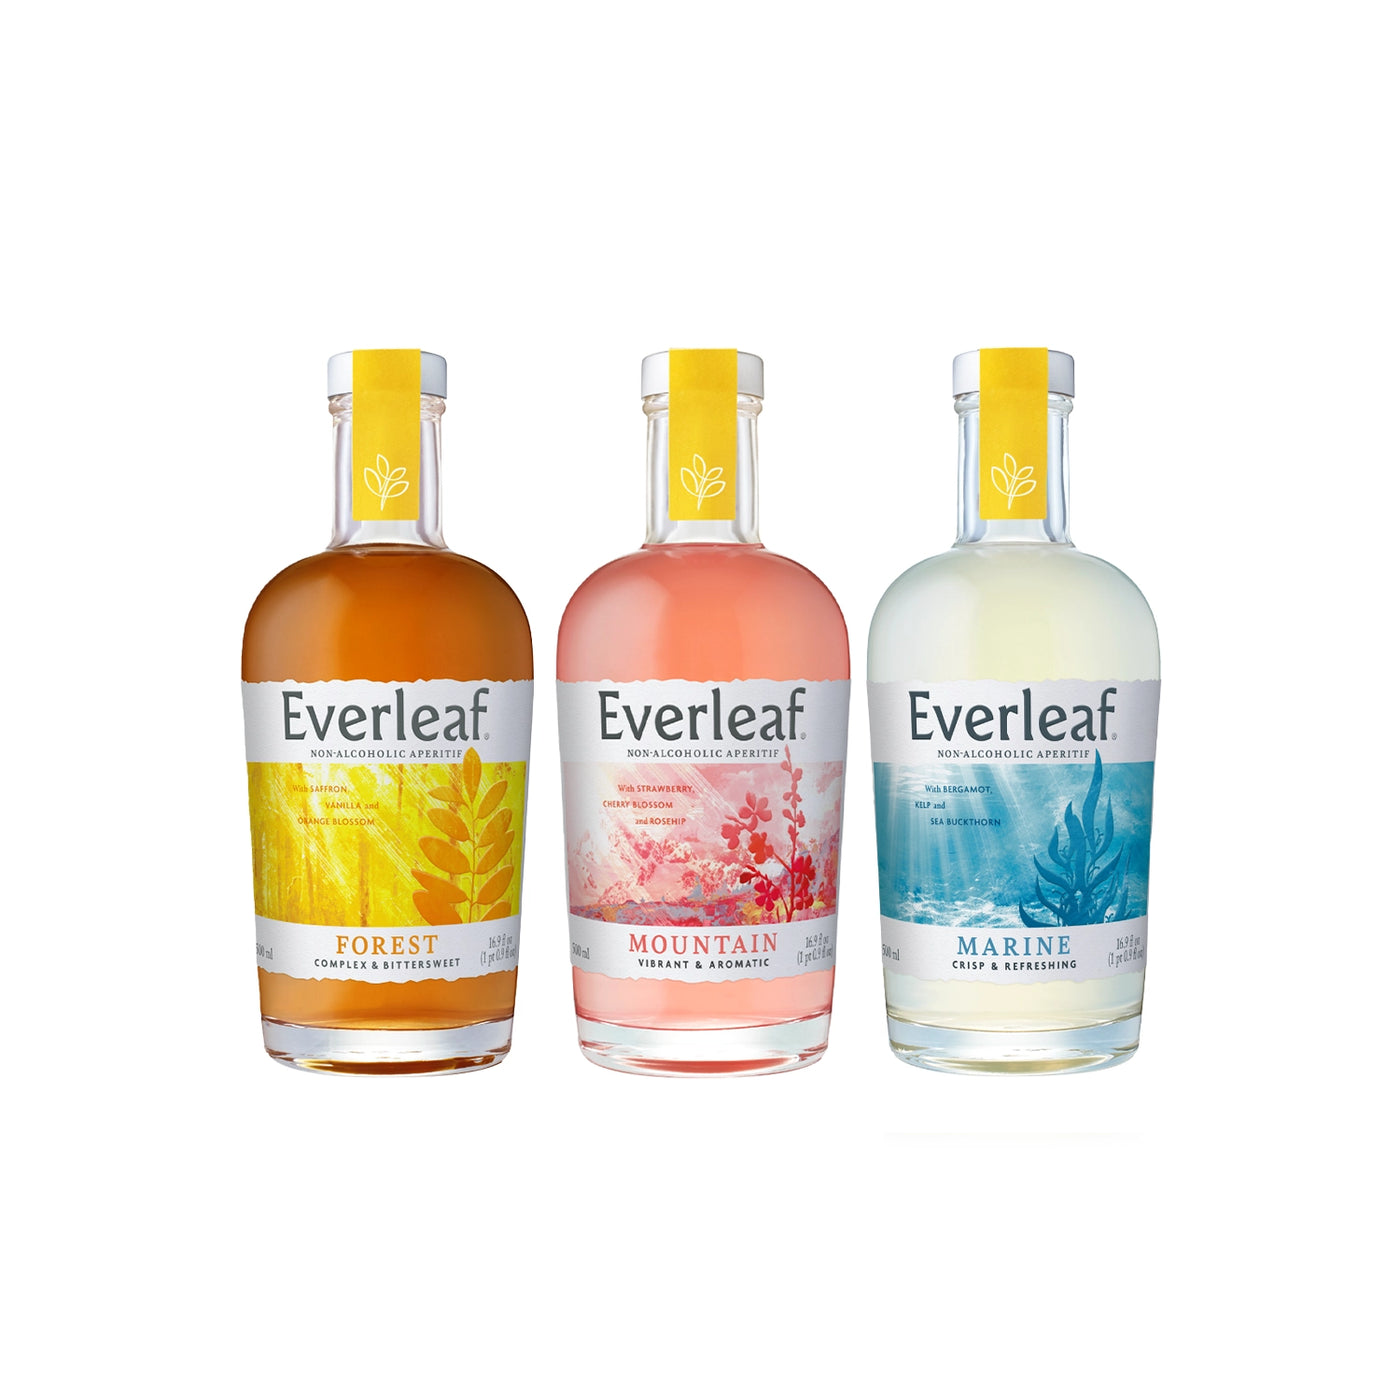 Everleaf non-alcoholic spirits